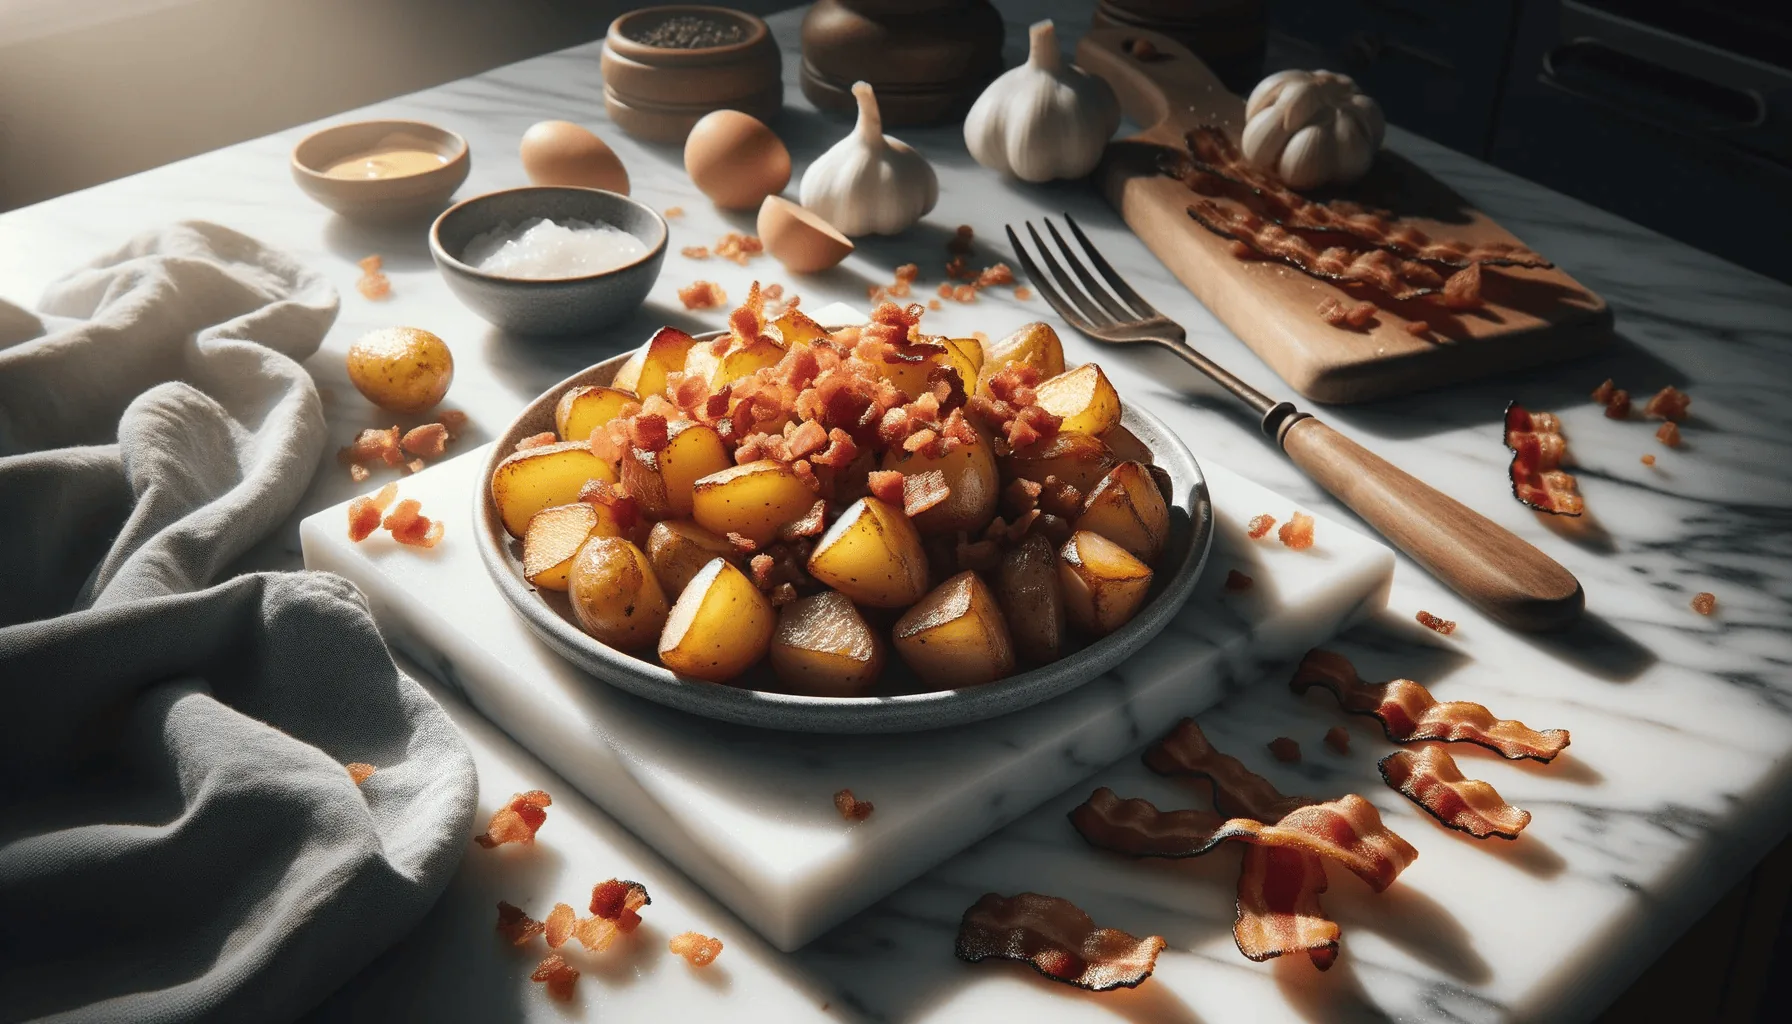 Bacon roasted potatoes recipe, ready to serve